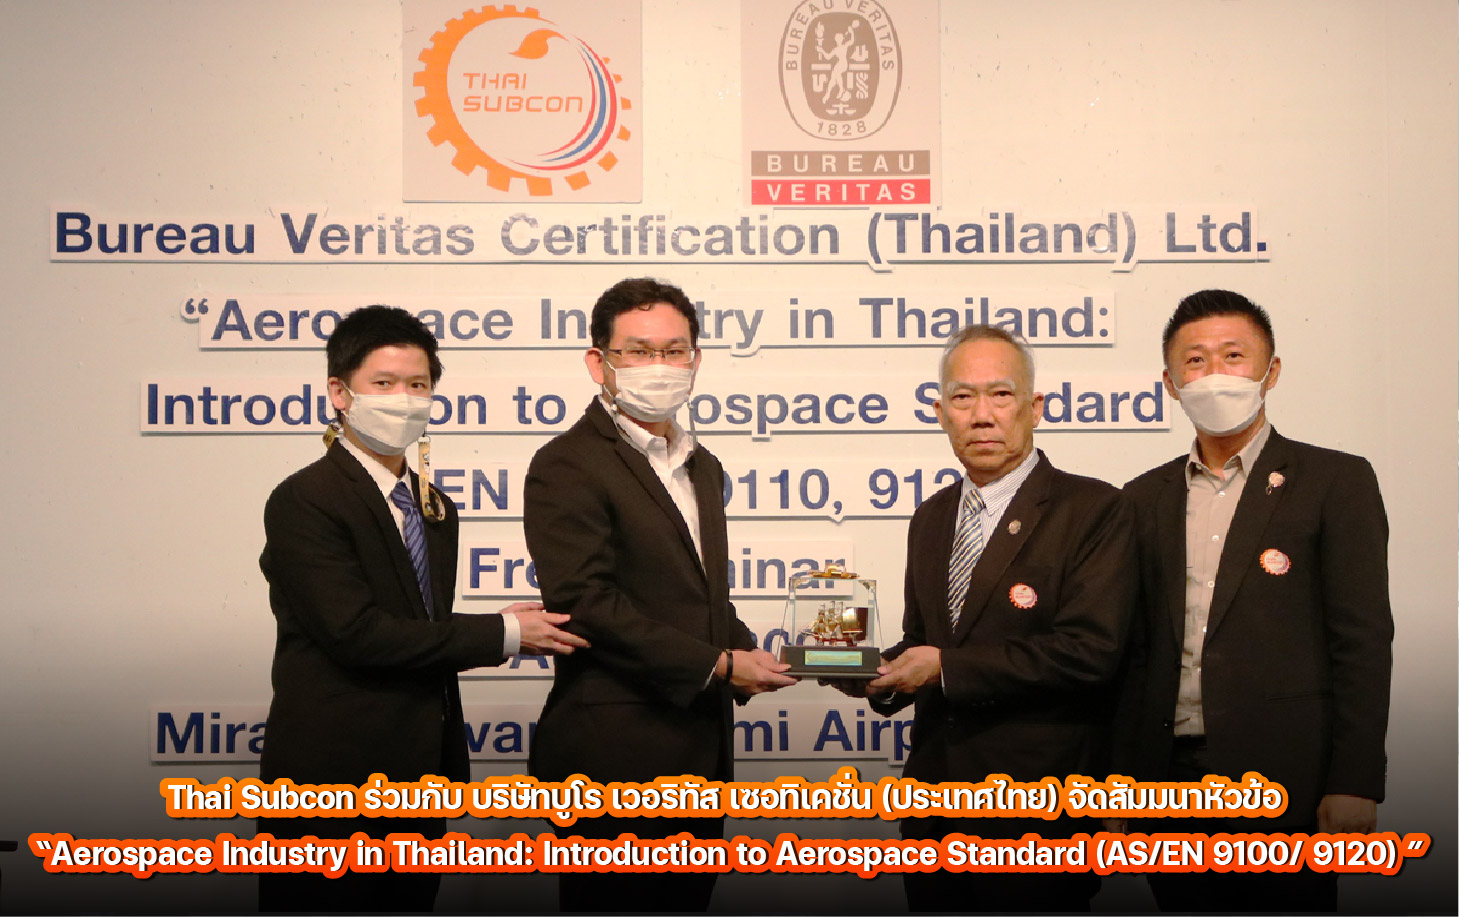 Thai Subcon ร่วมกับ บริษัทบูโร เวอริทัส เซอทิเคชั่น (ประเทศไทย) จัดสัมมนาหัวข้อ “Aerospace Industry in Thailand: Introduction to Aerospace Standard (AS/EN 9100/ 9120) ”